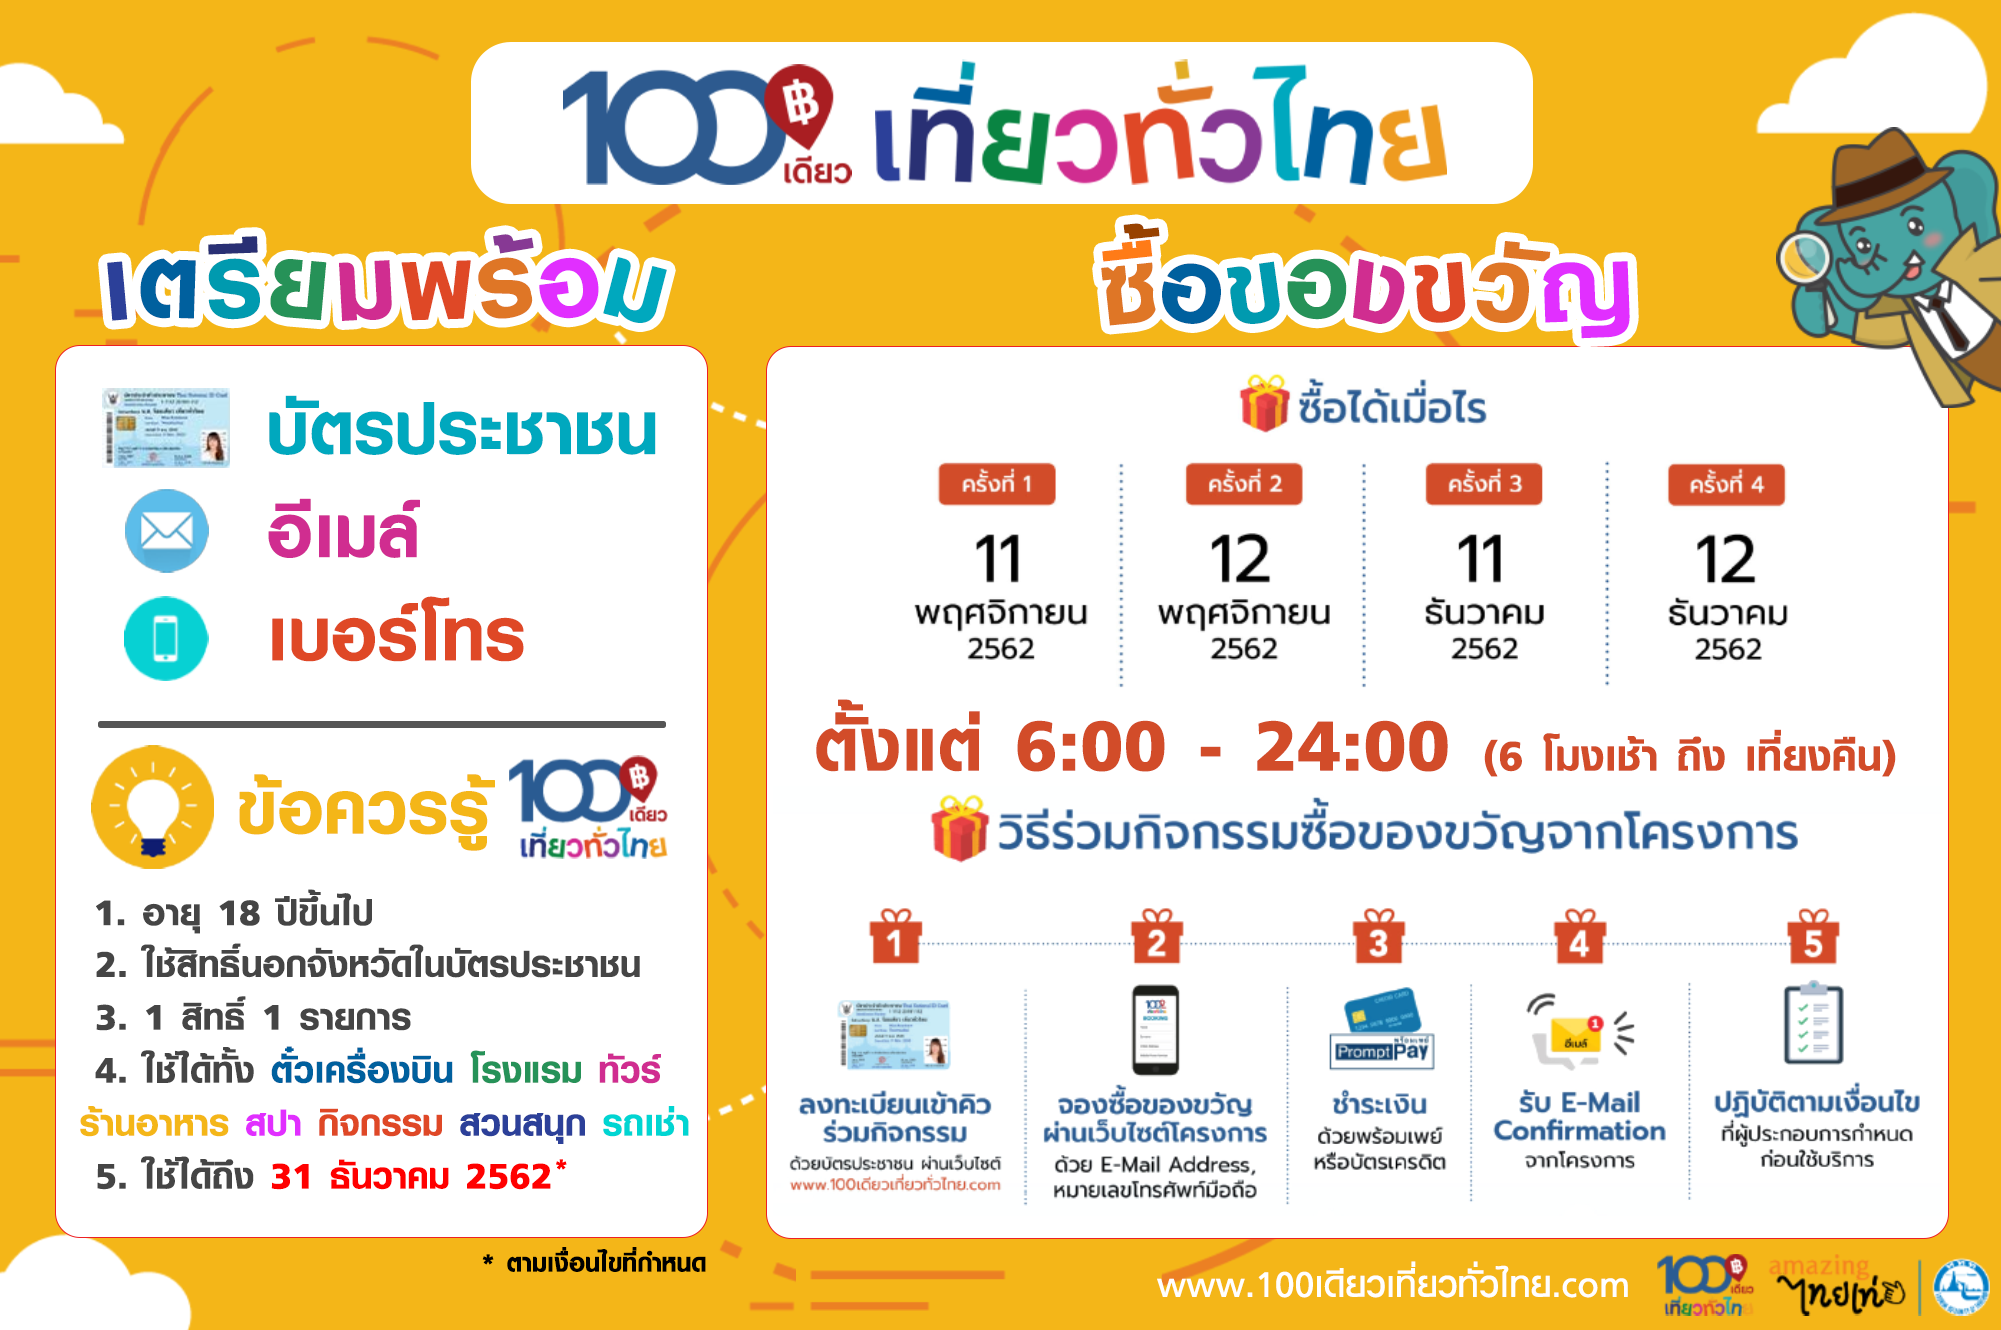 100-deaw-tiew-tua-thai-register 100 เดียวเที่ยวทั่วไทย